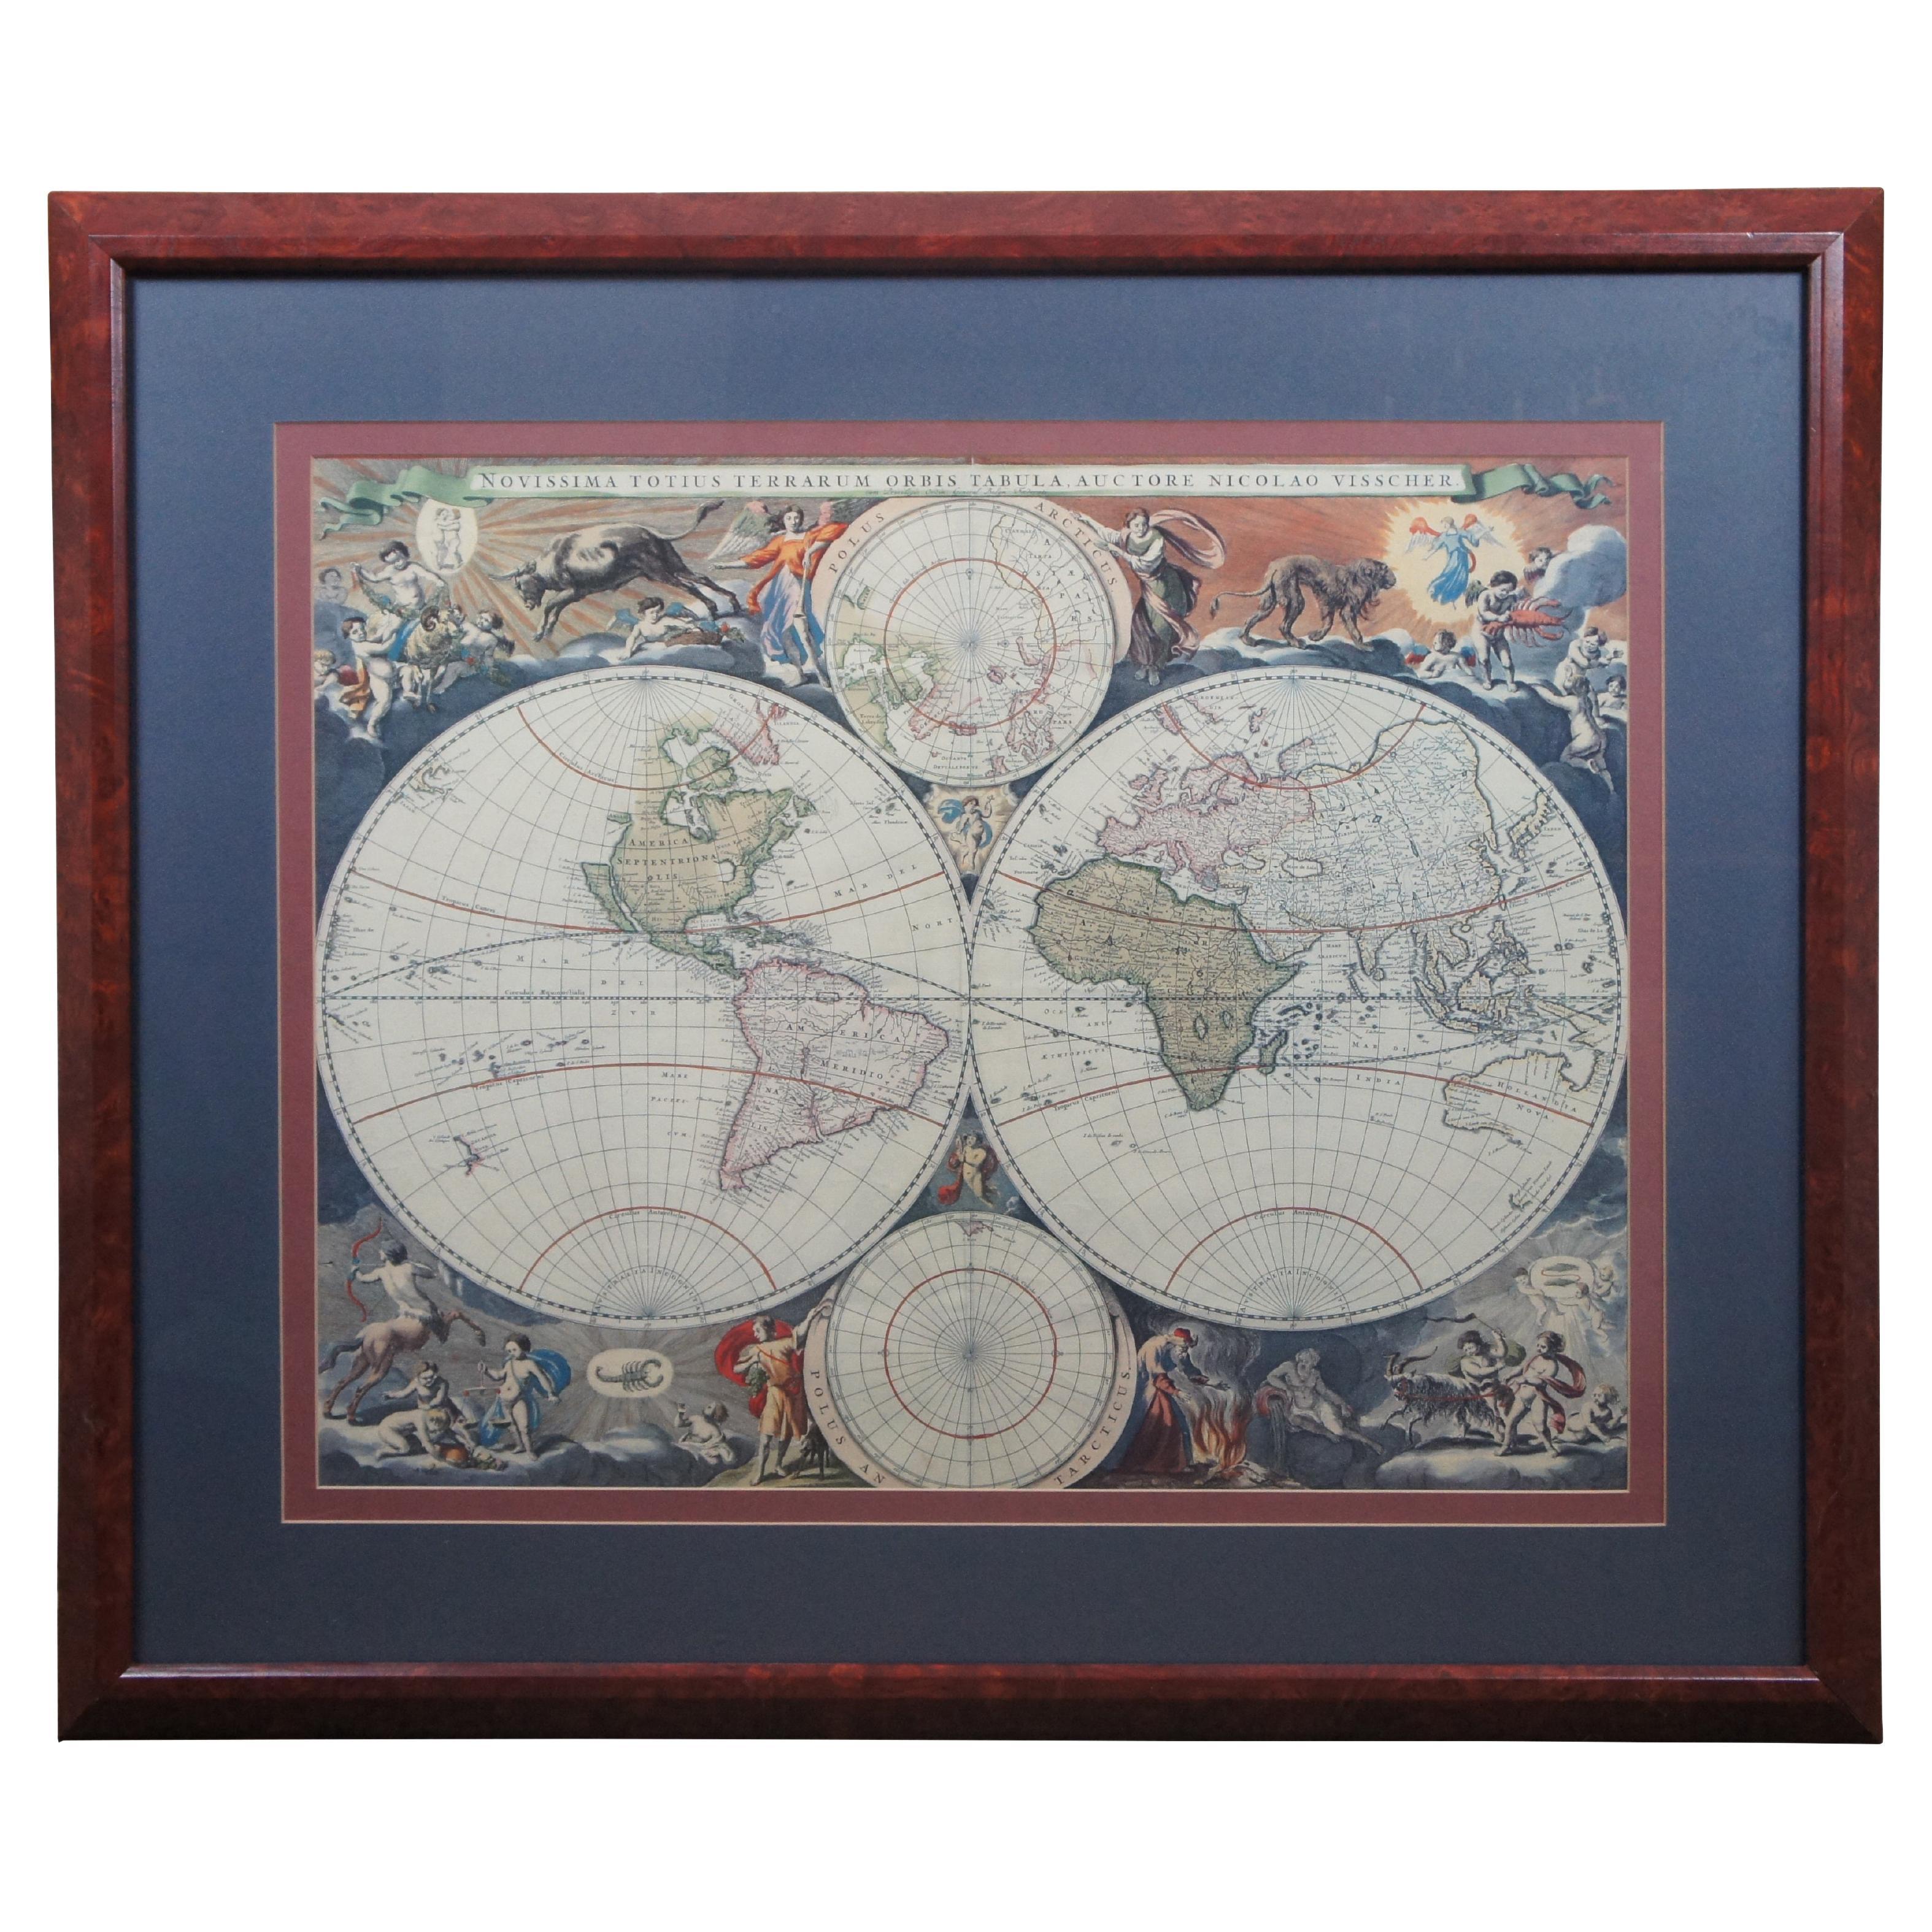 Novissima Totius Terrarum Orbis Tabula Map After Nicolaes Visscher Burled Frame For Sale